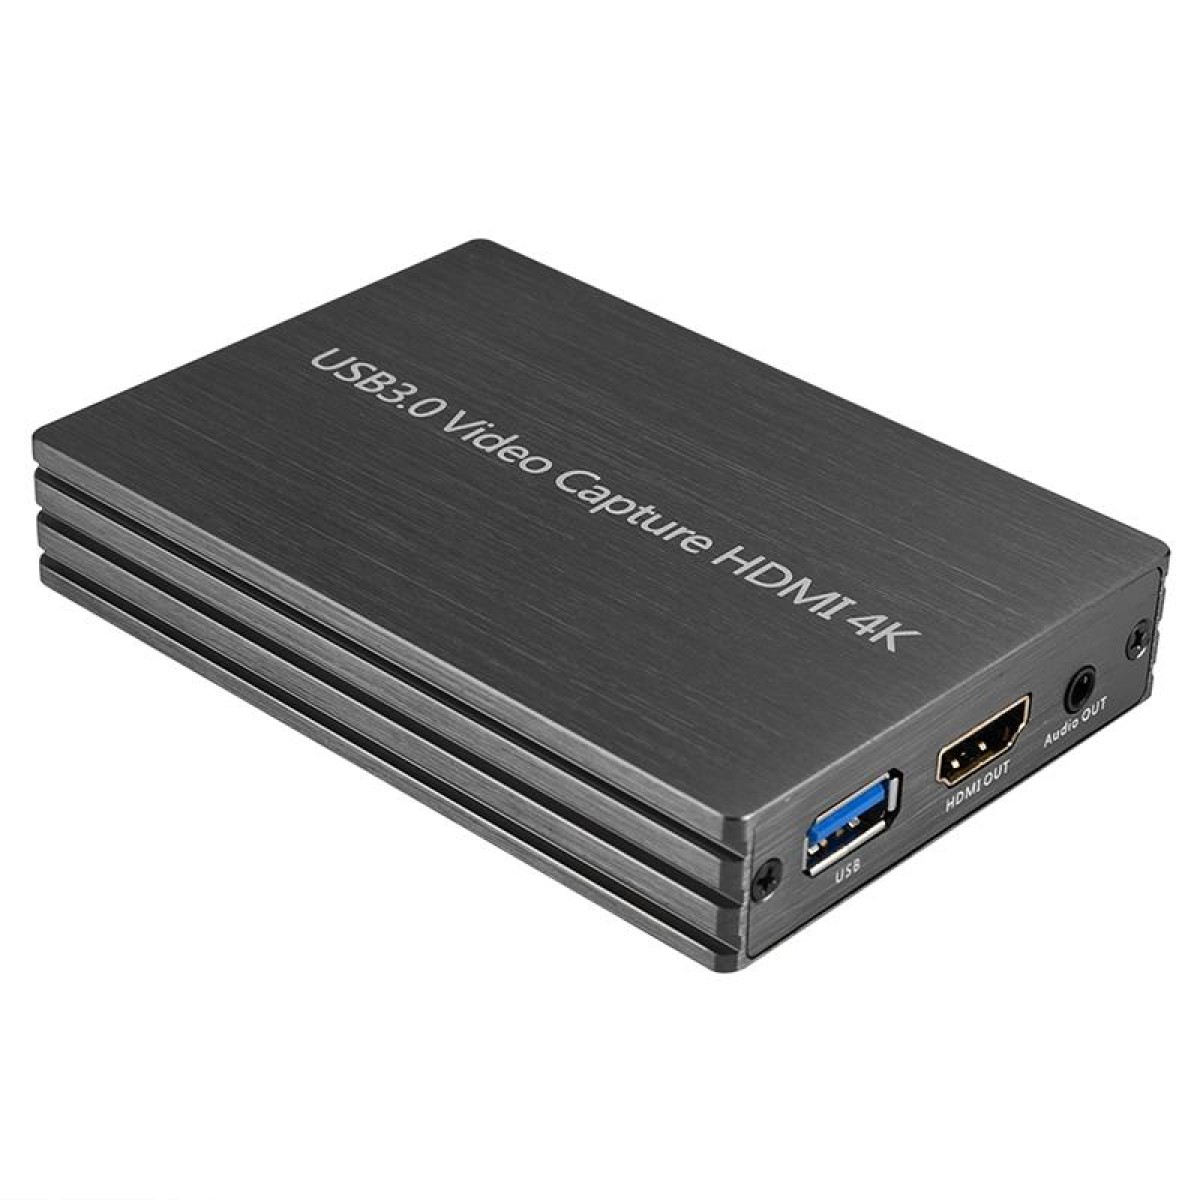 NK-S300 USB 3.0 HDMI 4K HD Video Capture Card Device(Grey)